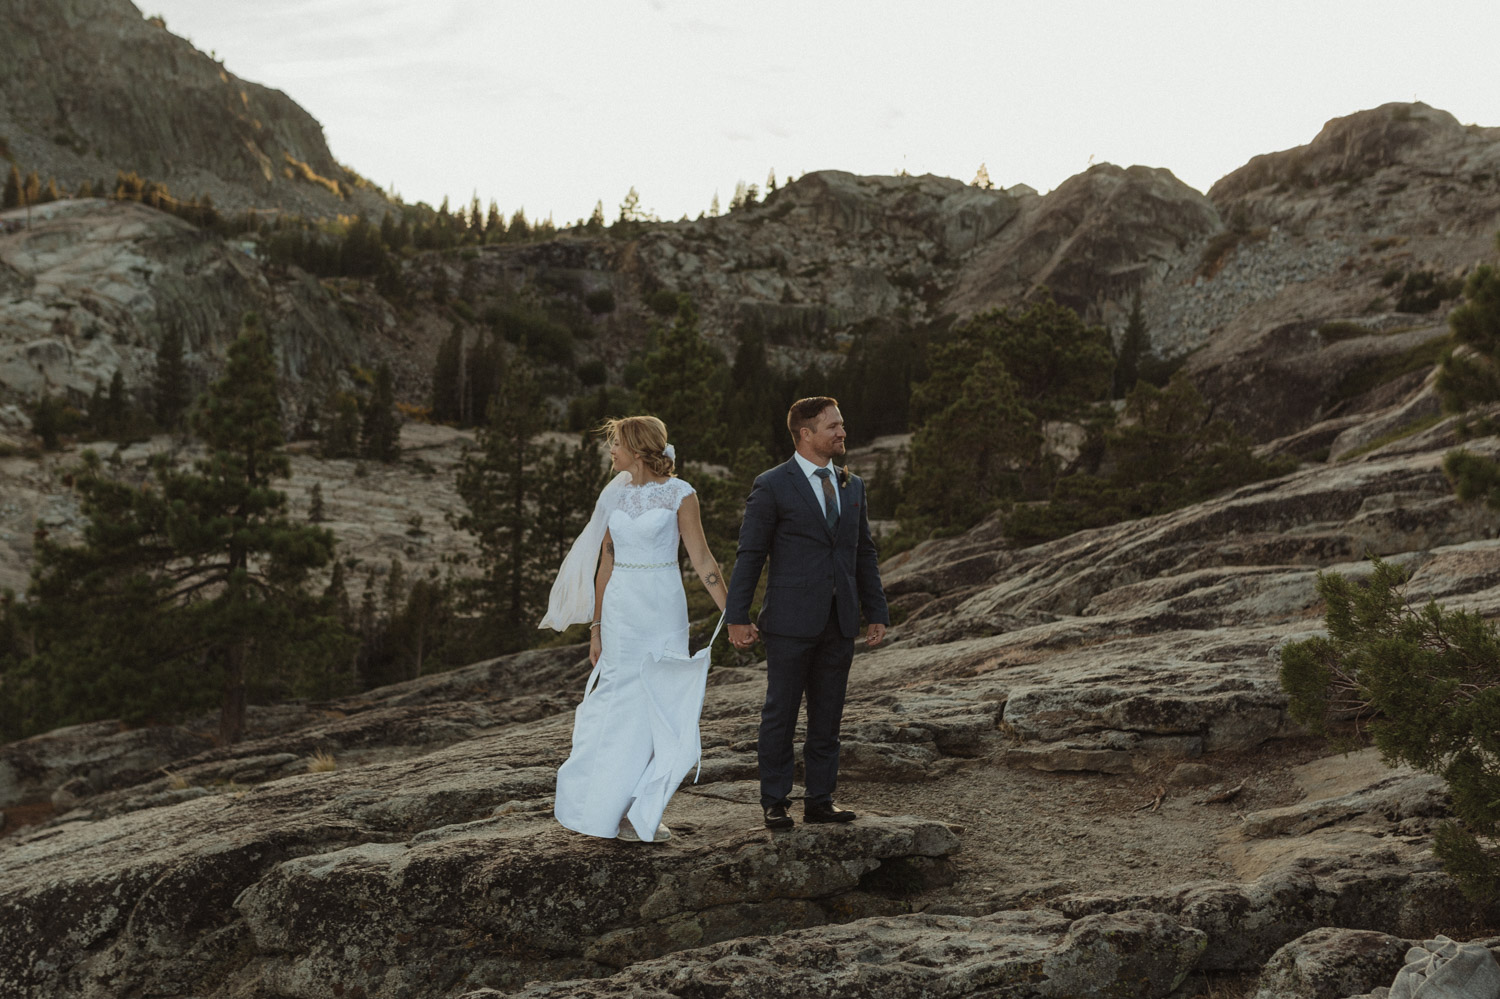 North Lake Tahoe wedding couples photo at Donner Summit